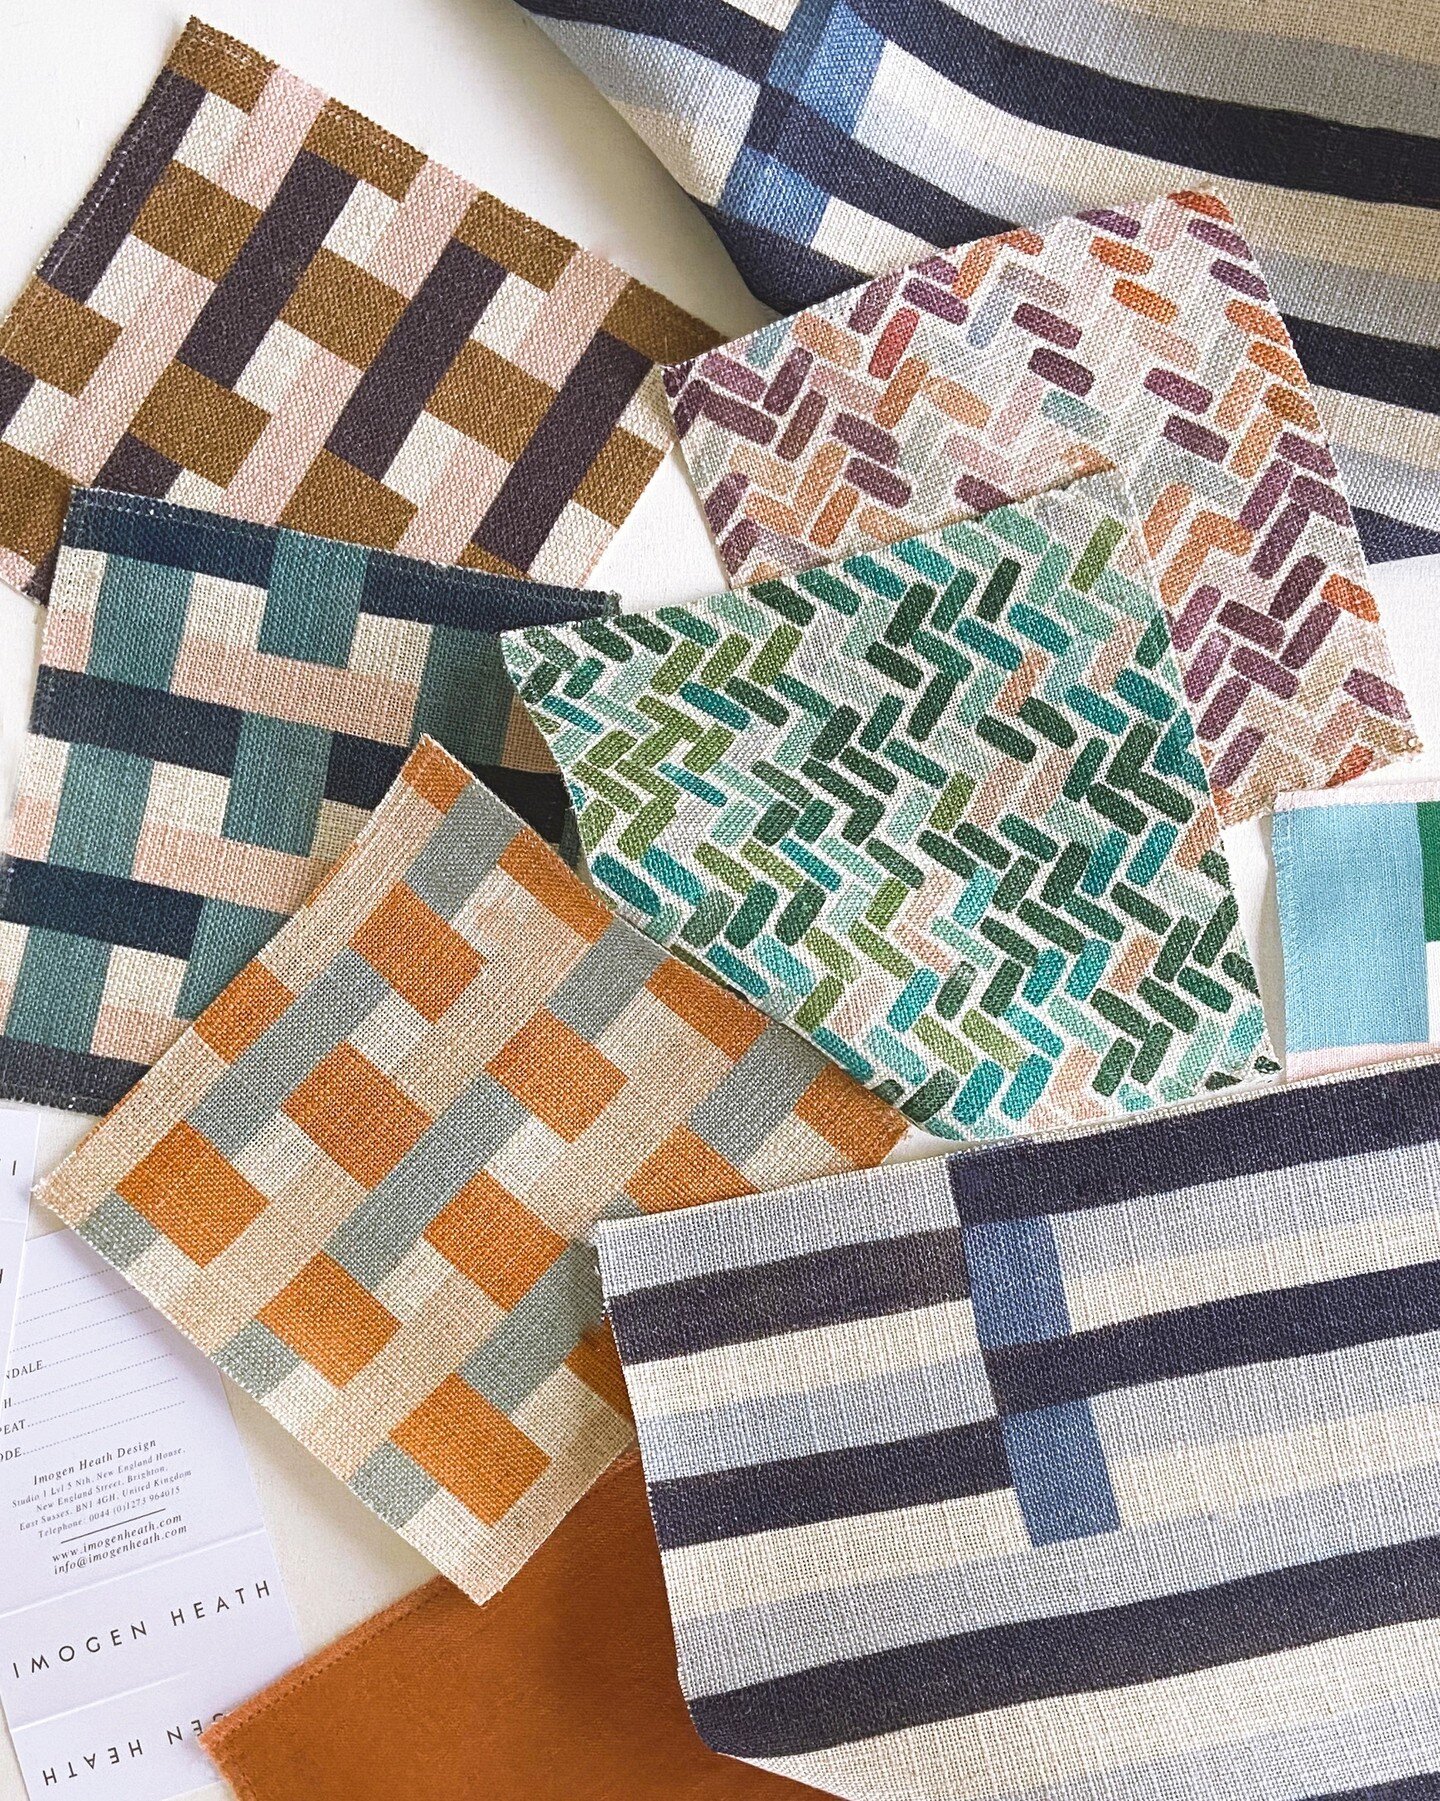 Marina - Recycled Wool Melton Fabric — Imogen Heath Interiors